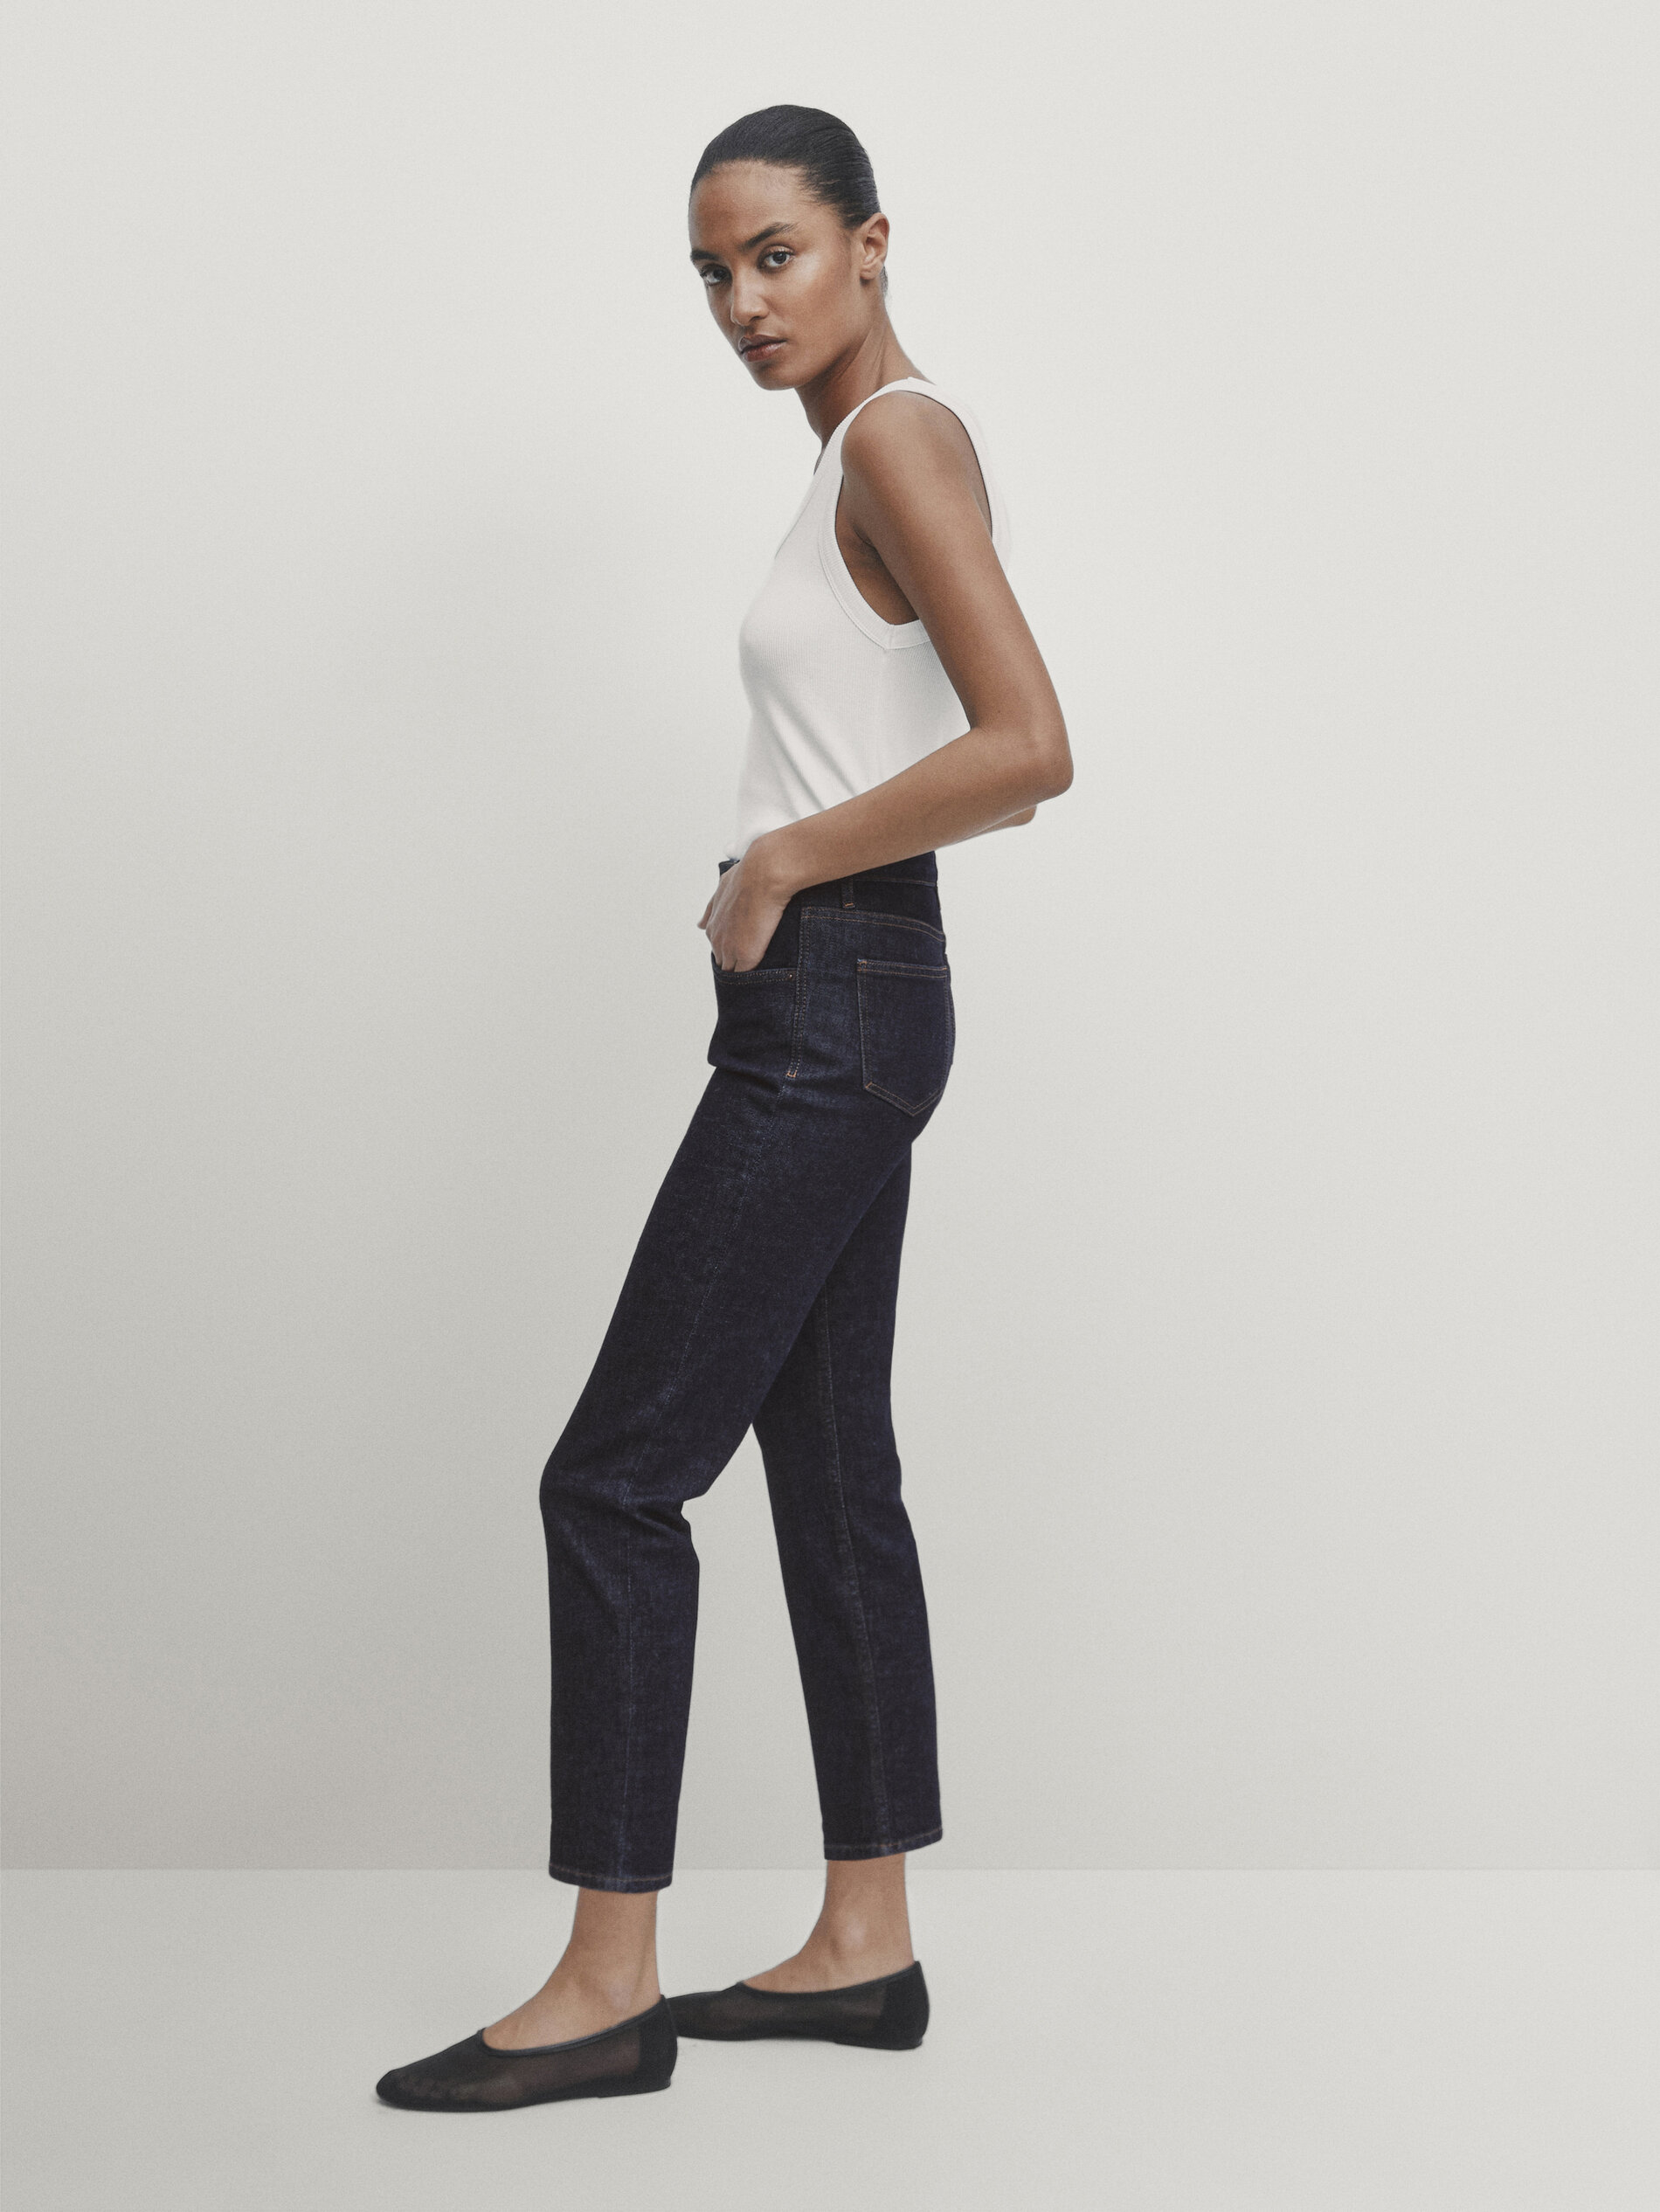 Jeans tiro medio slim cropped fit confort